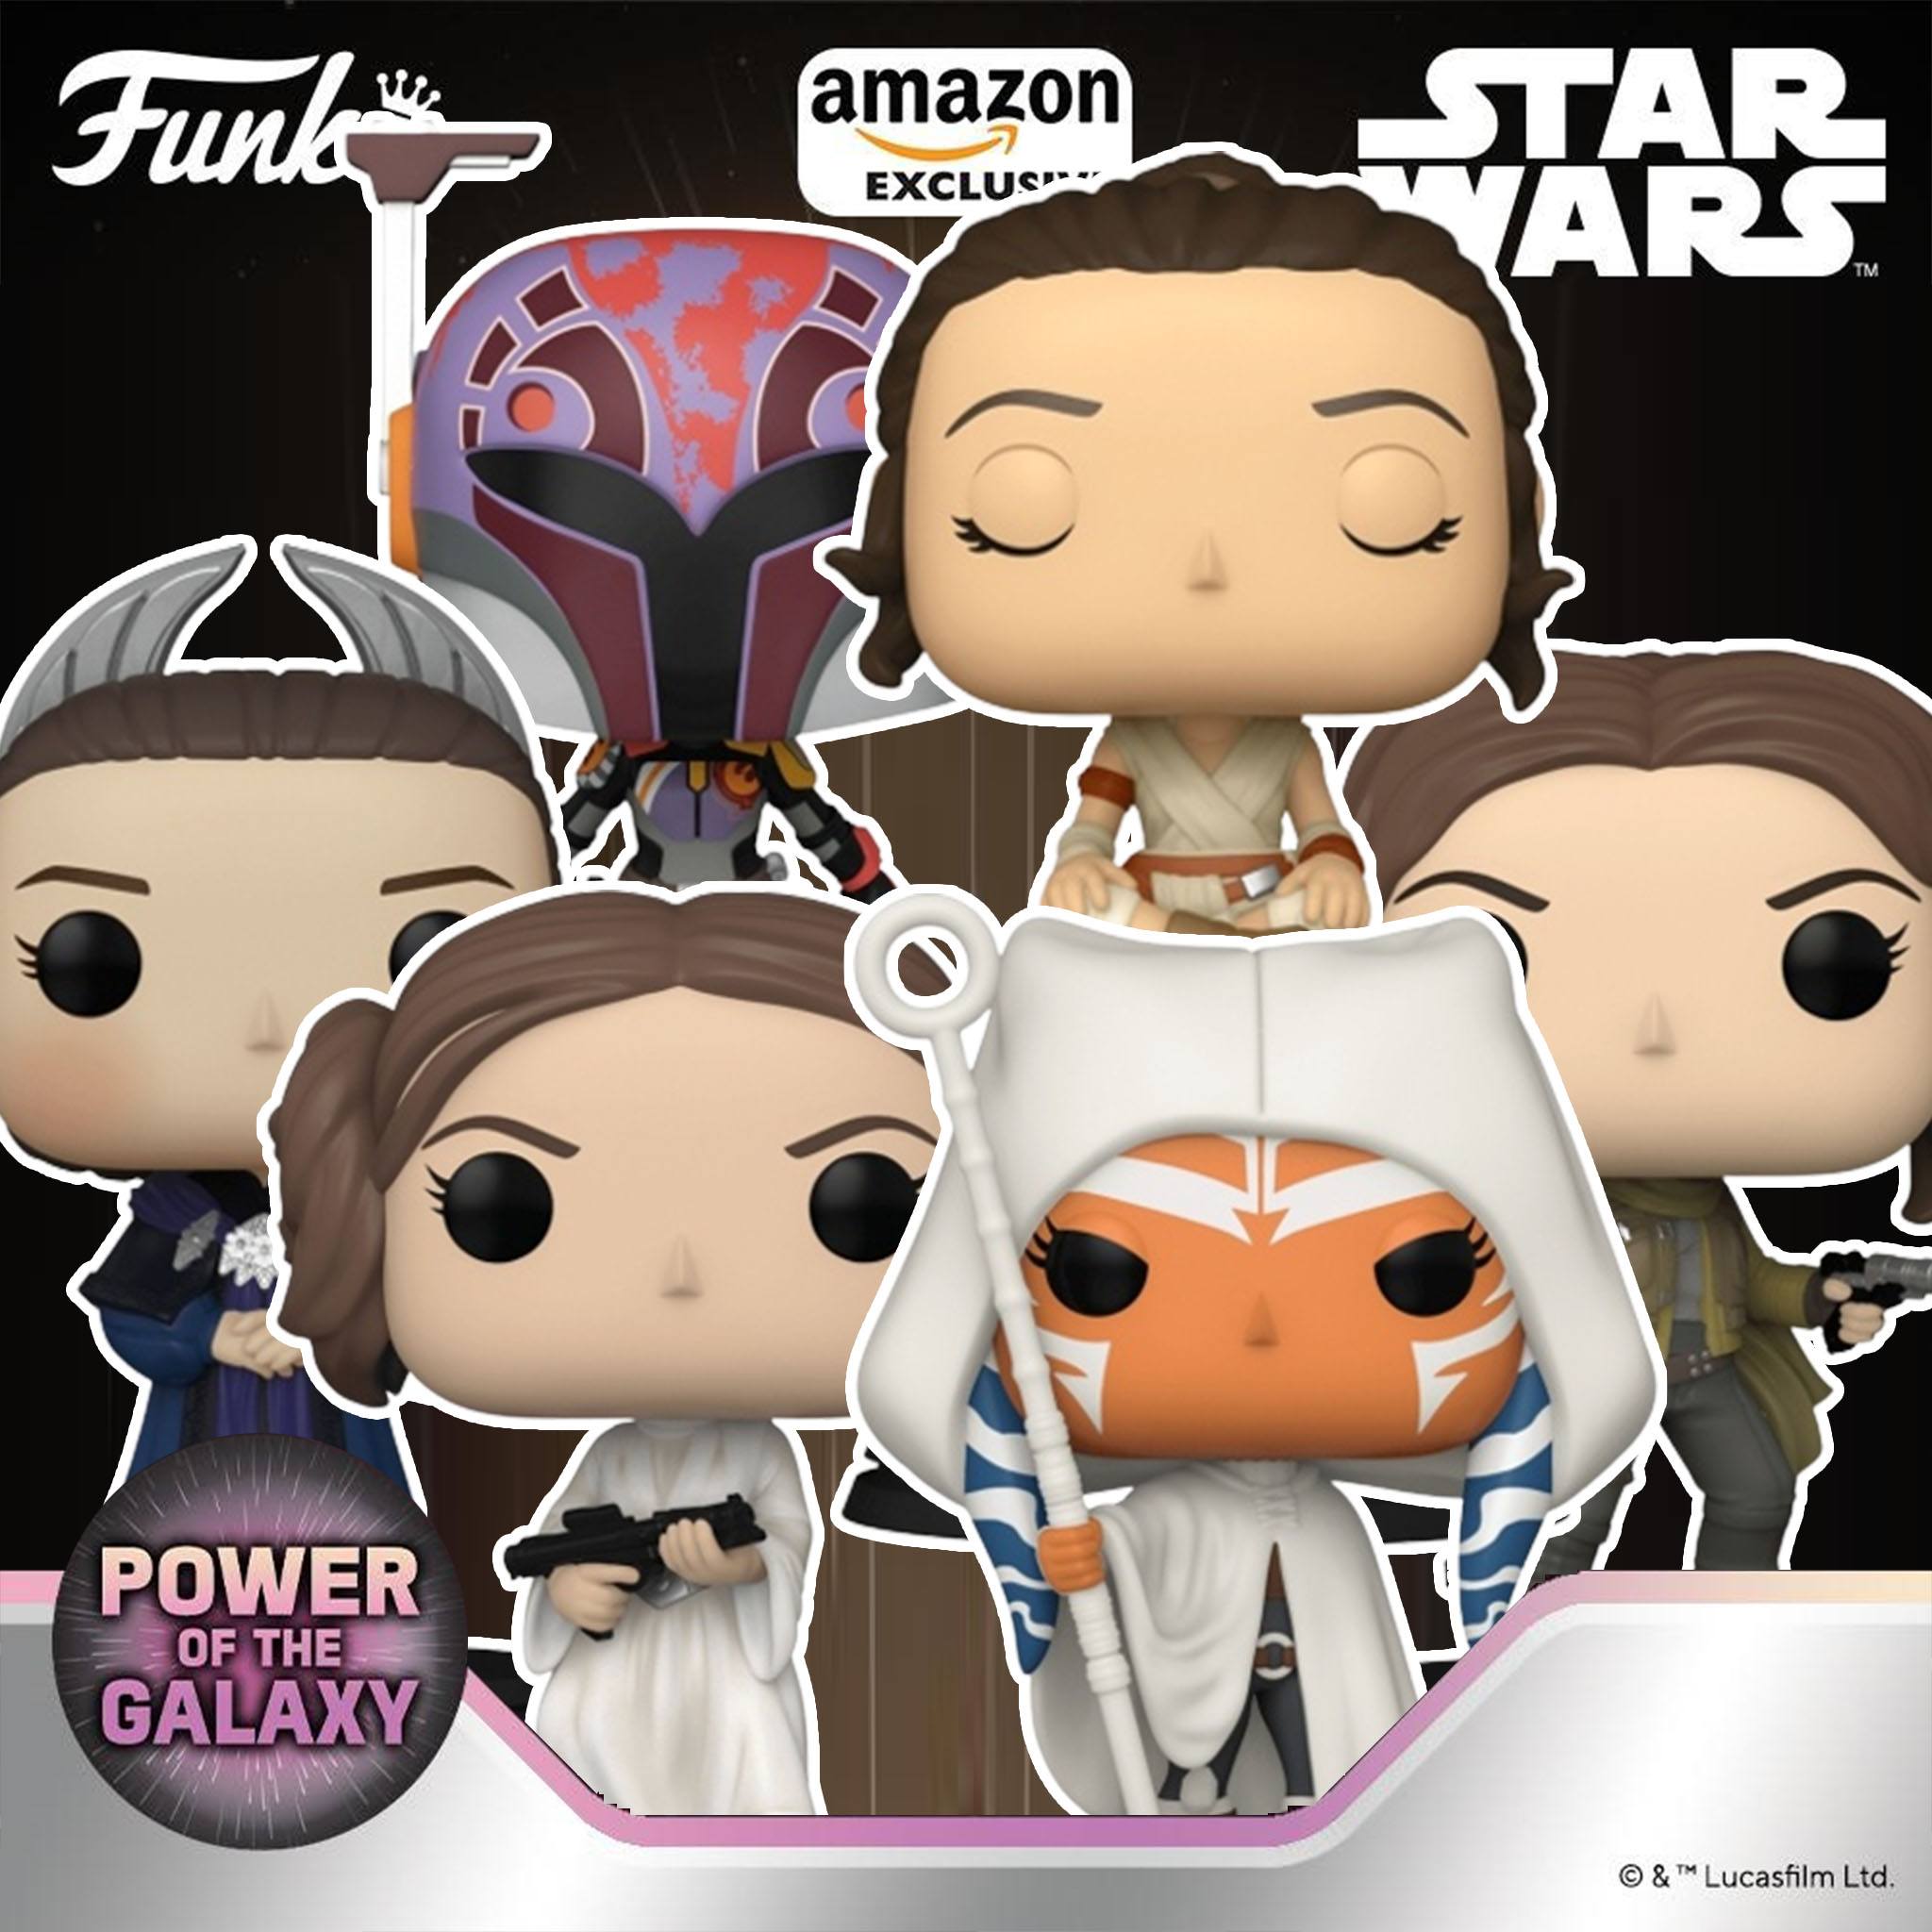 Le set Funko POP Power of the Galaxy met en avant les femmes puissantes de Star Wars